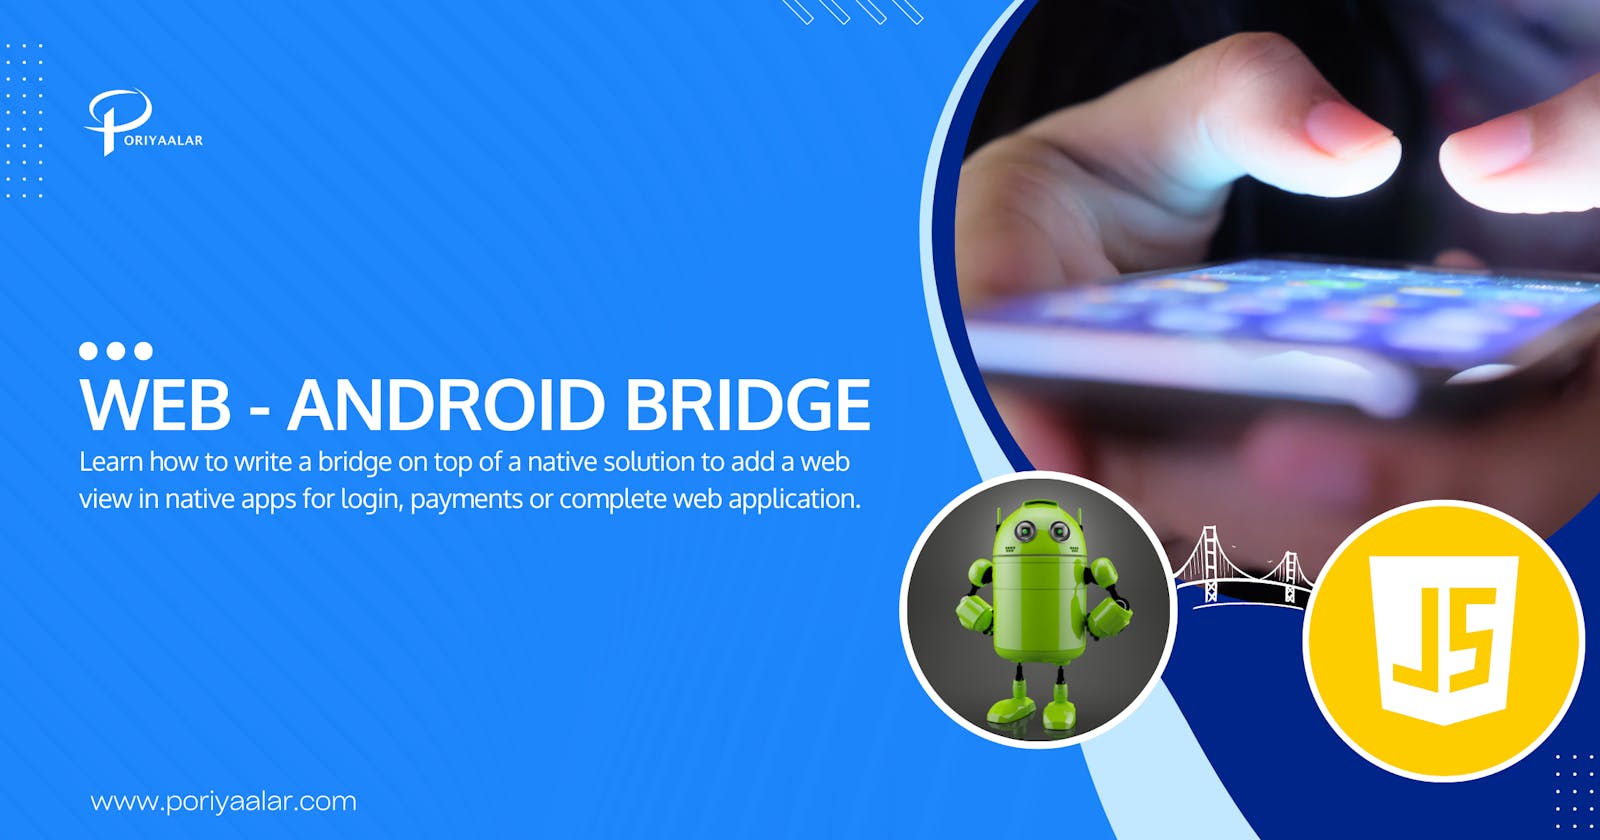 Web - Android Bridge